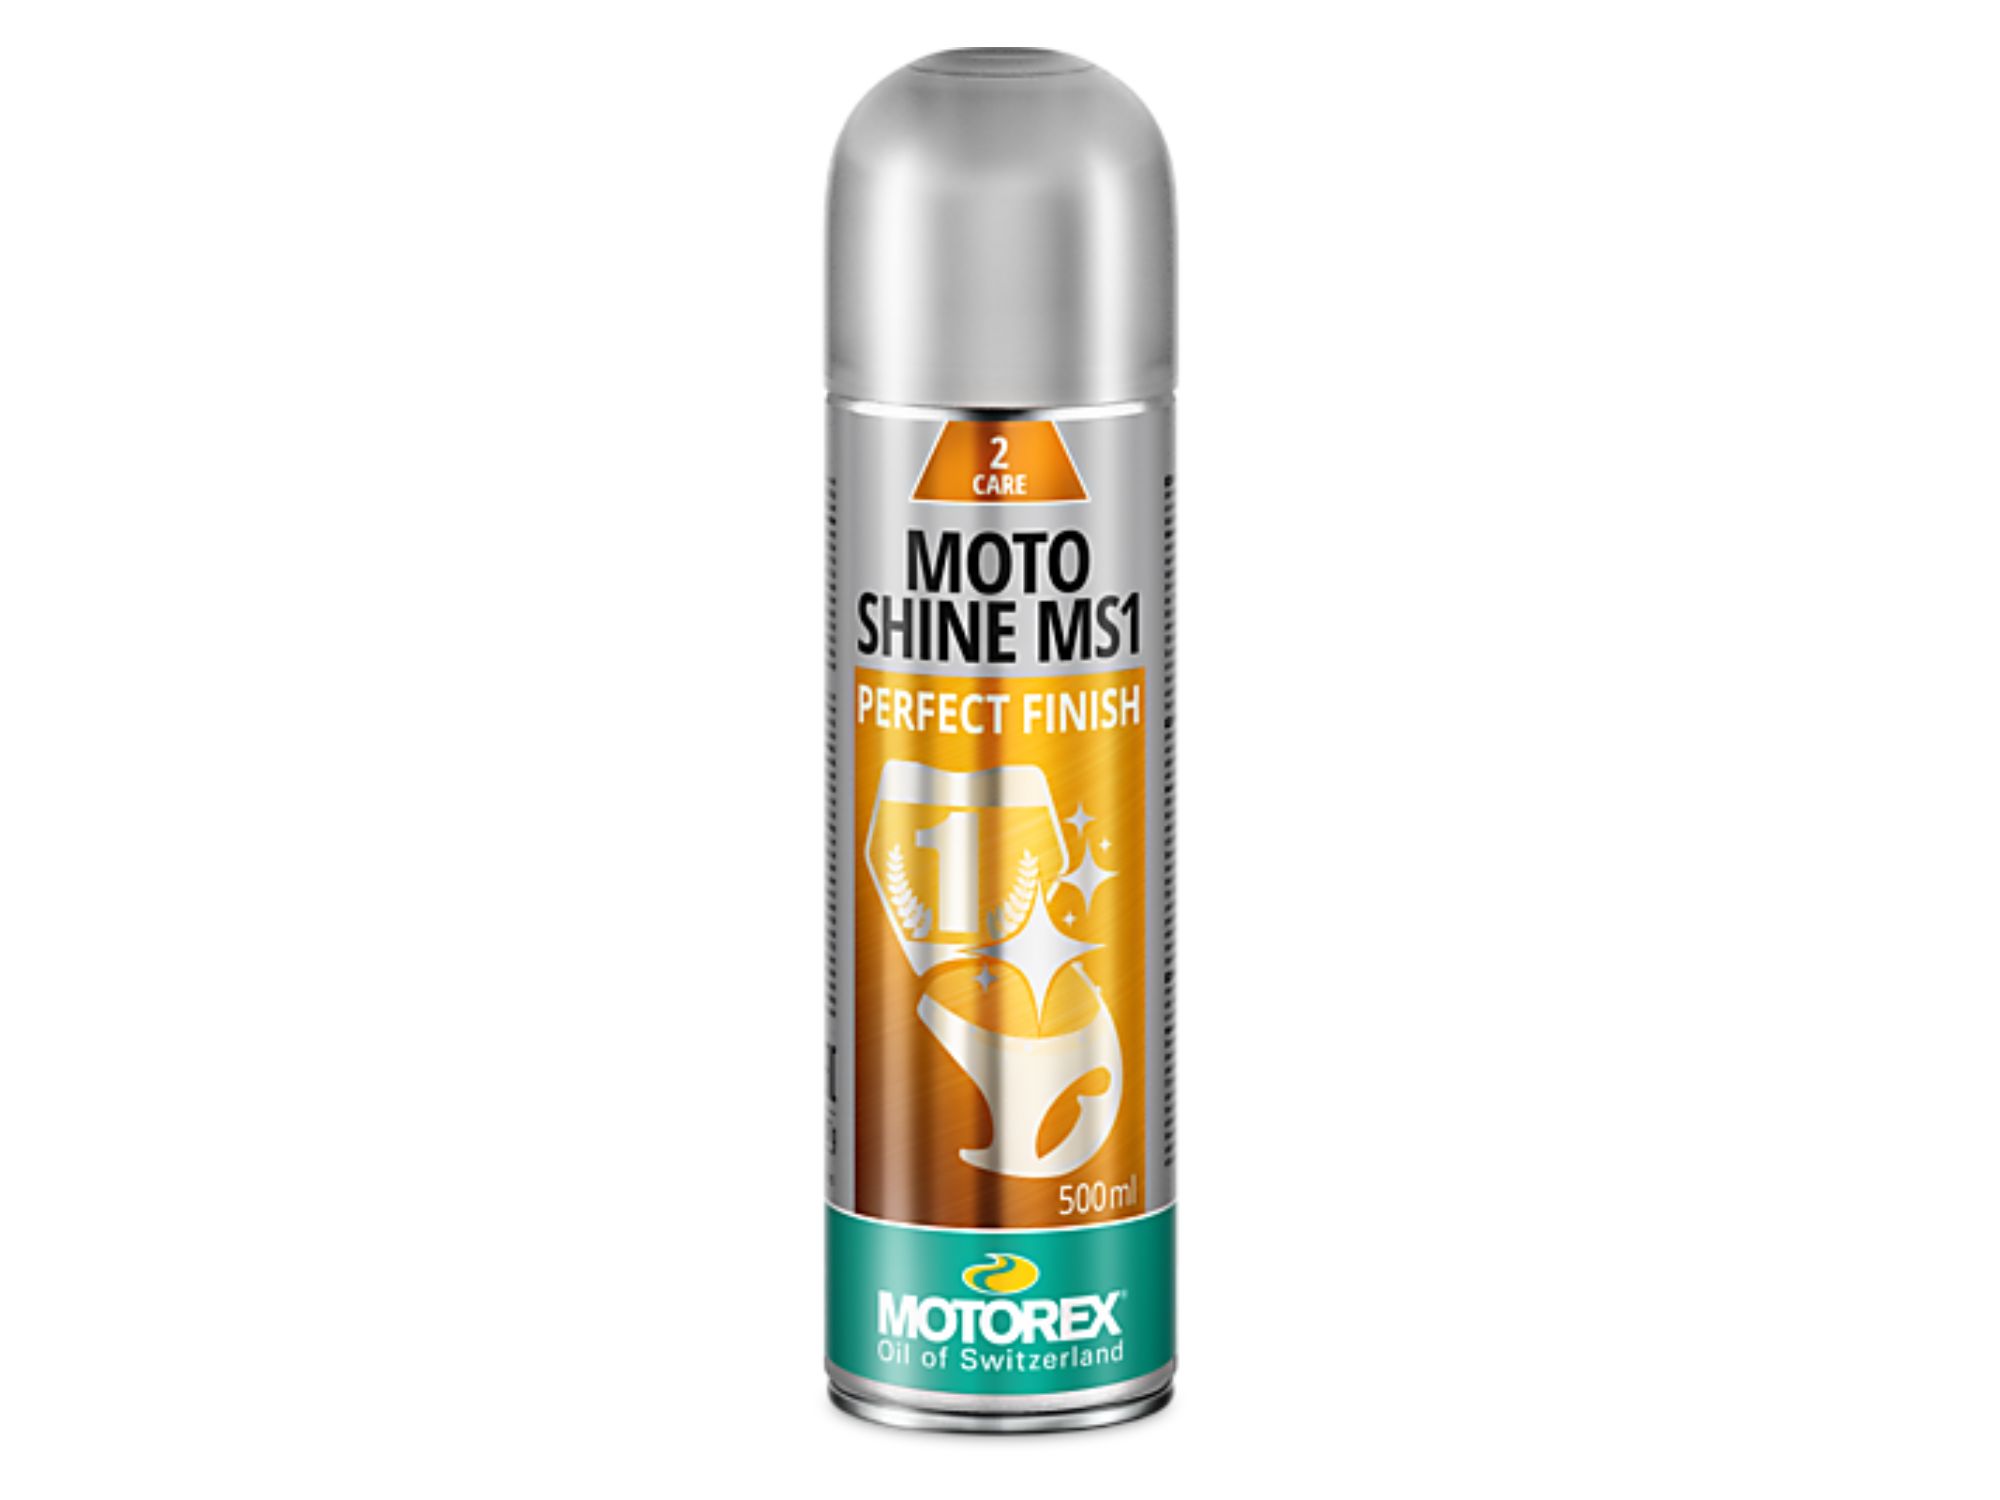 Motorex Moto Shine MS1 Gloss Spray 500ml